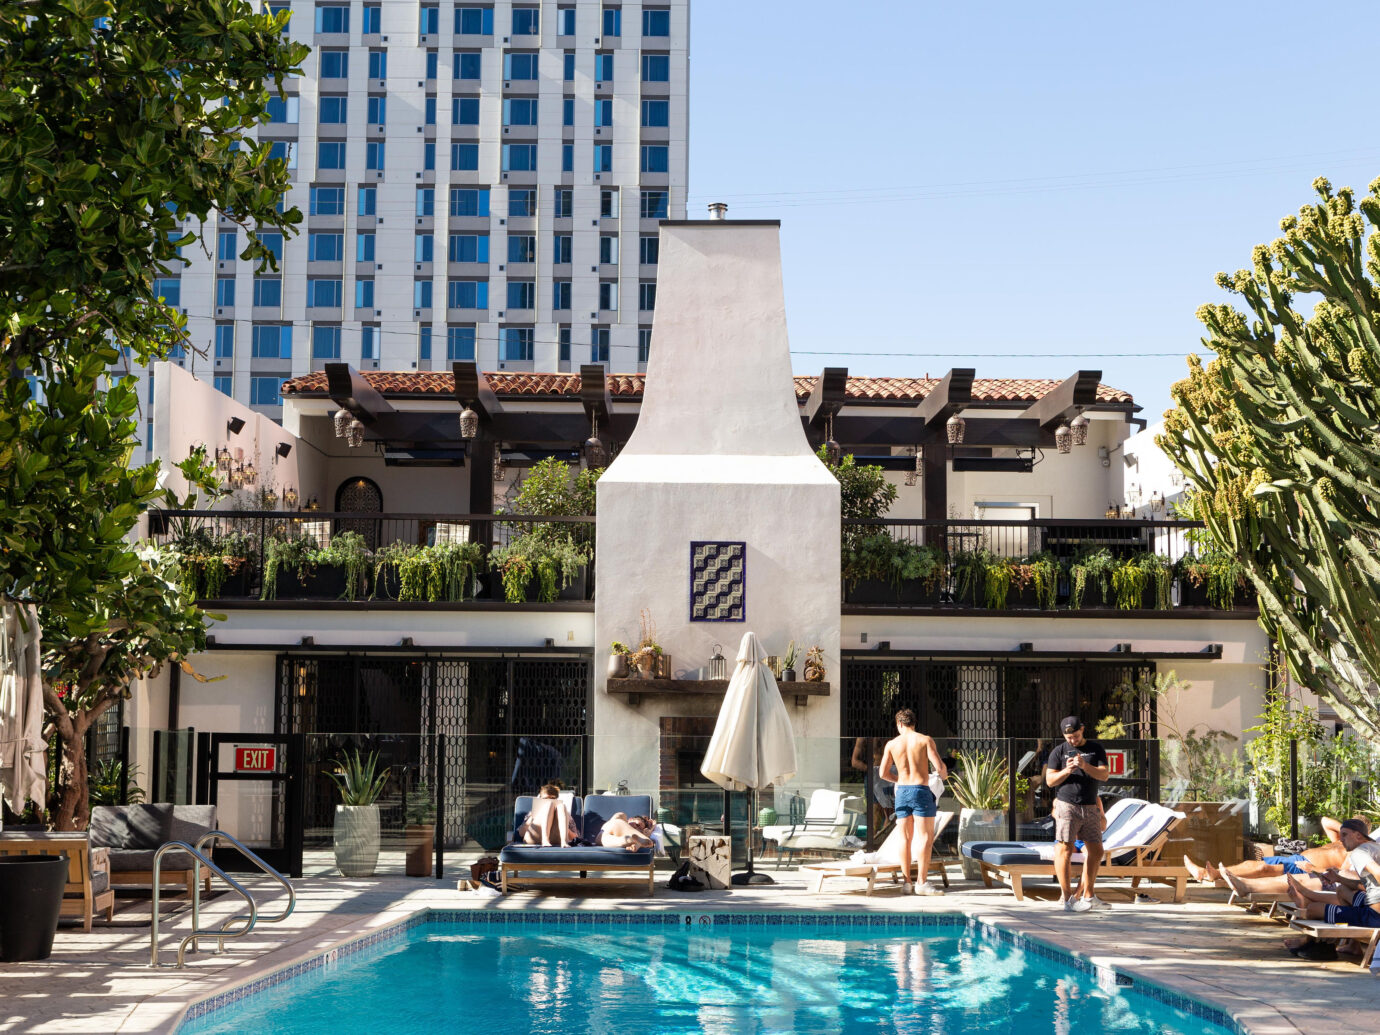 Hotel Figueroa pool